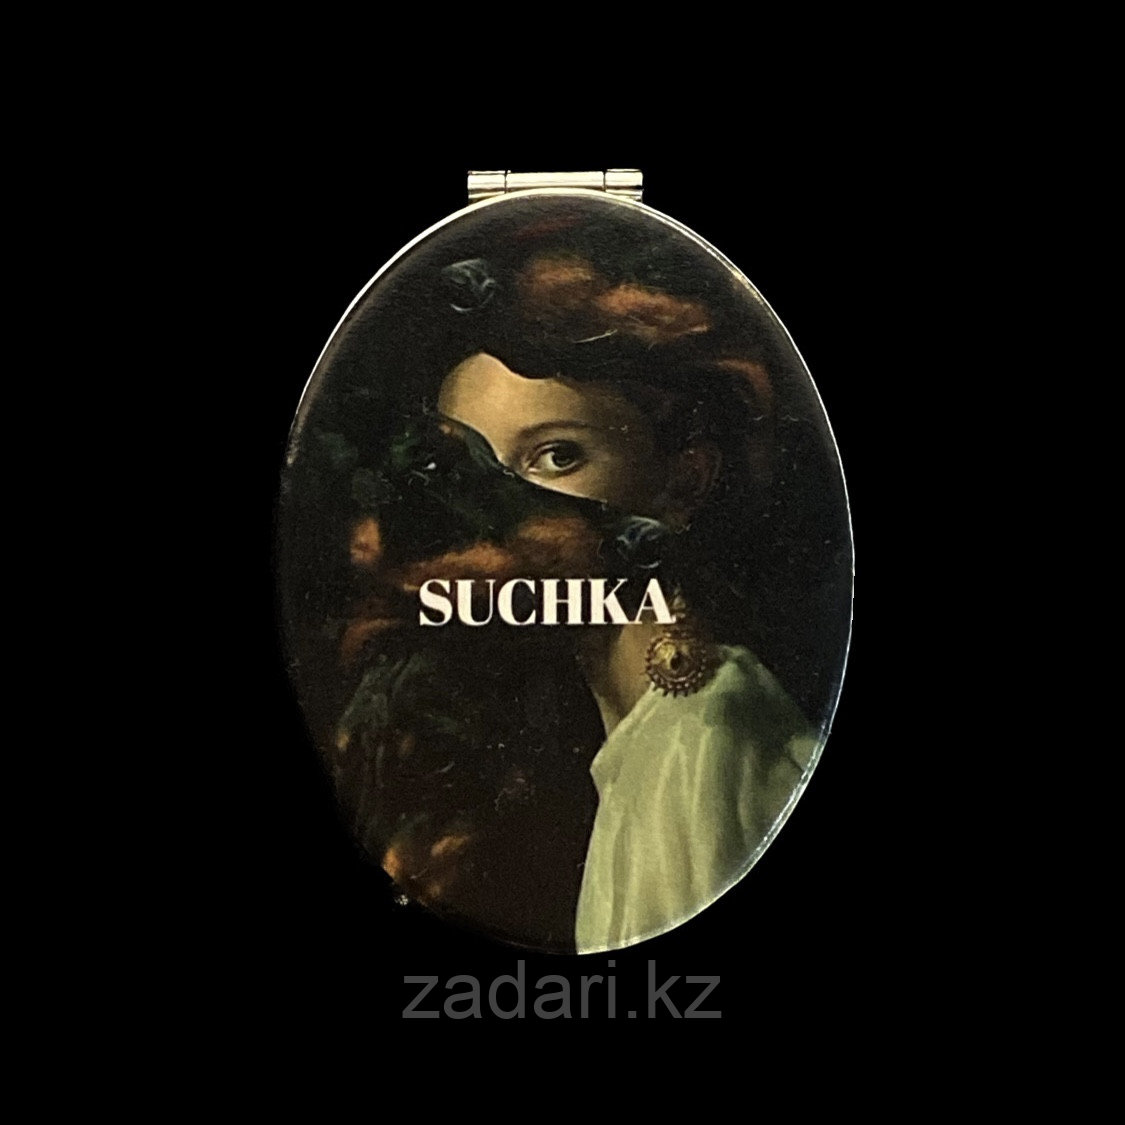 Зеркало «SUCHKA» карманное, фото 1